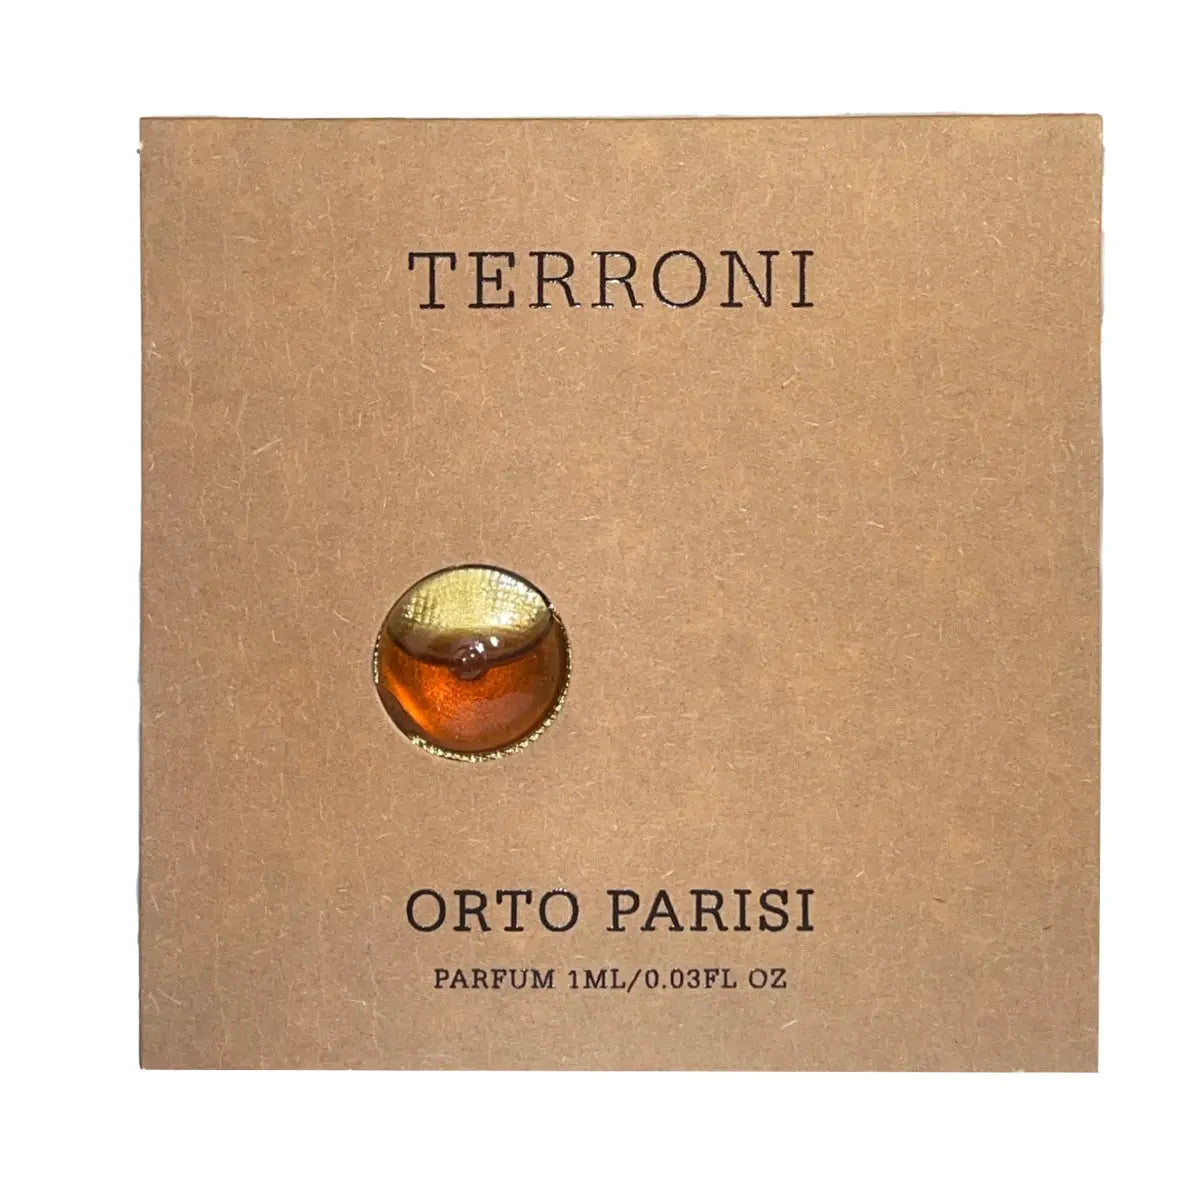 Orto Parisi Terroni Eau de Parfume 1ml sample Orto Parisi